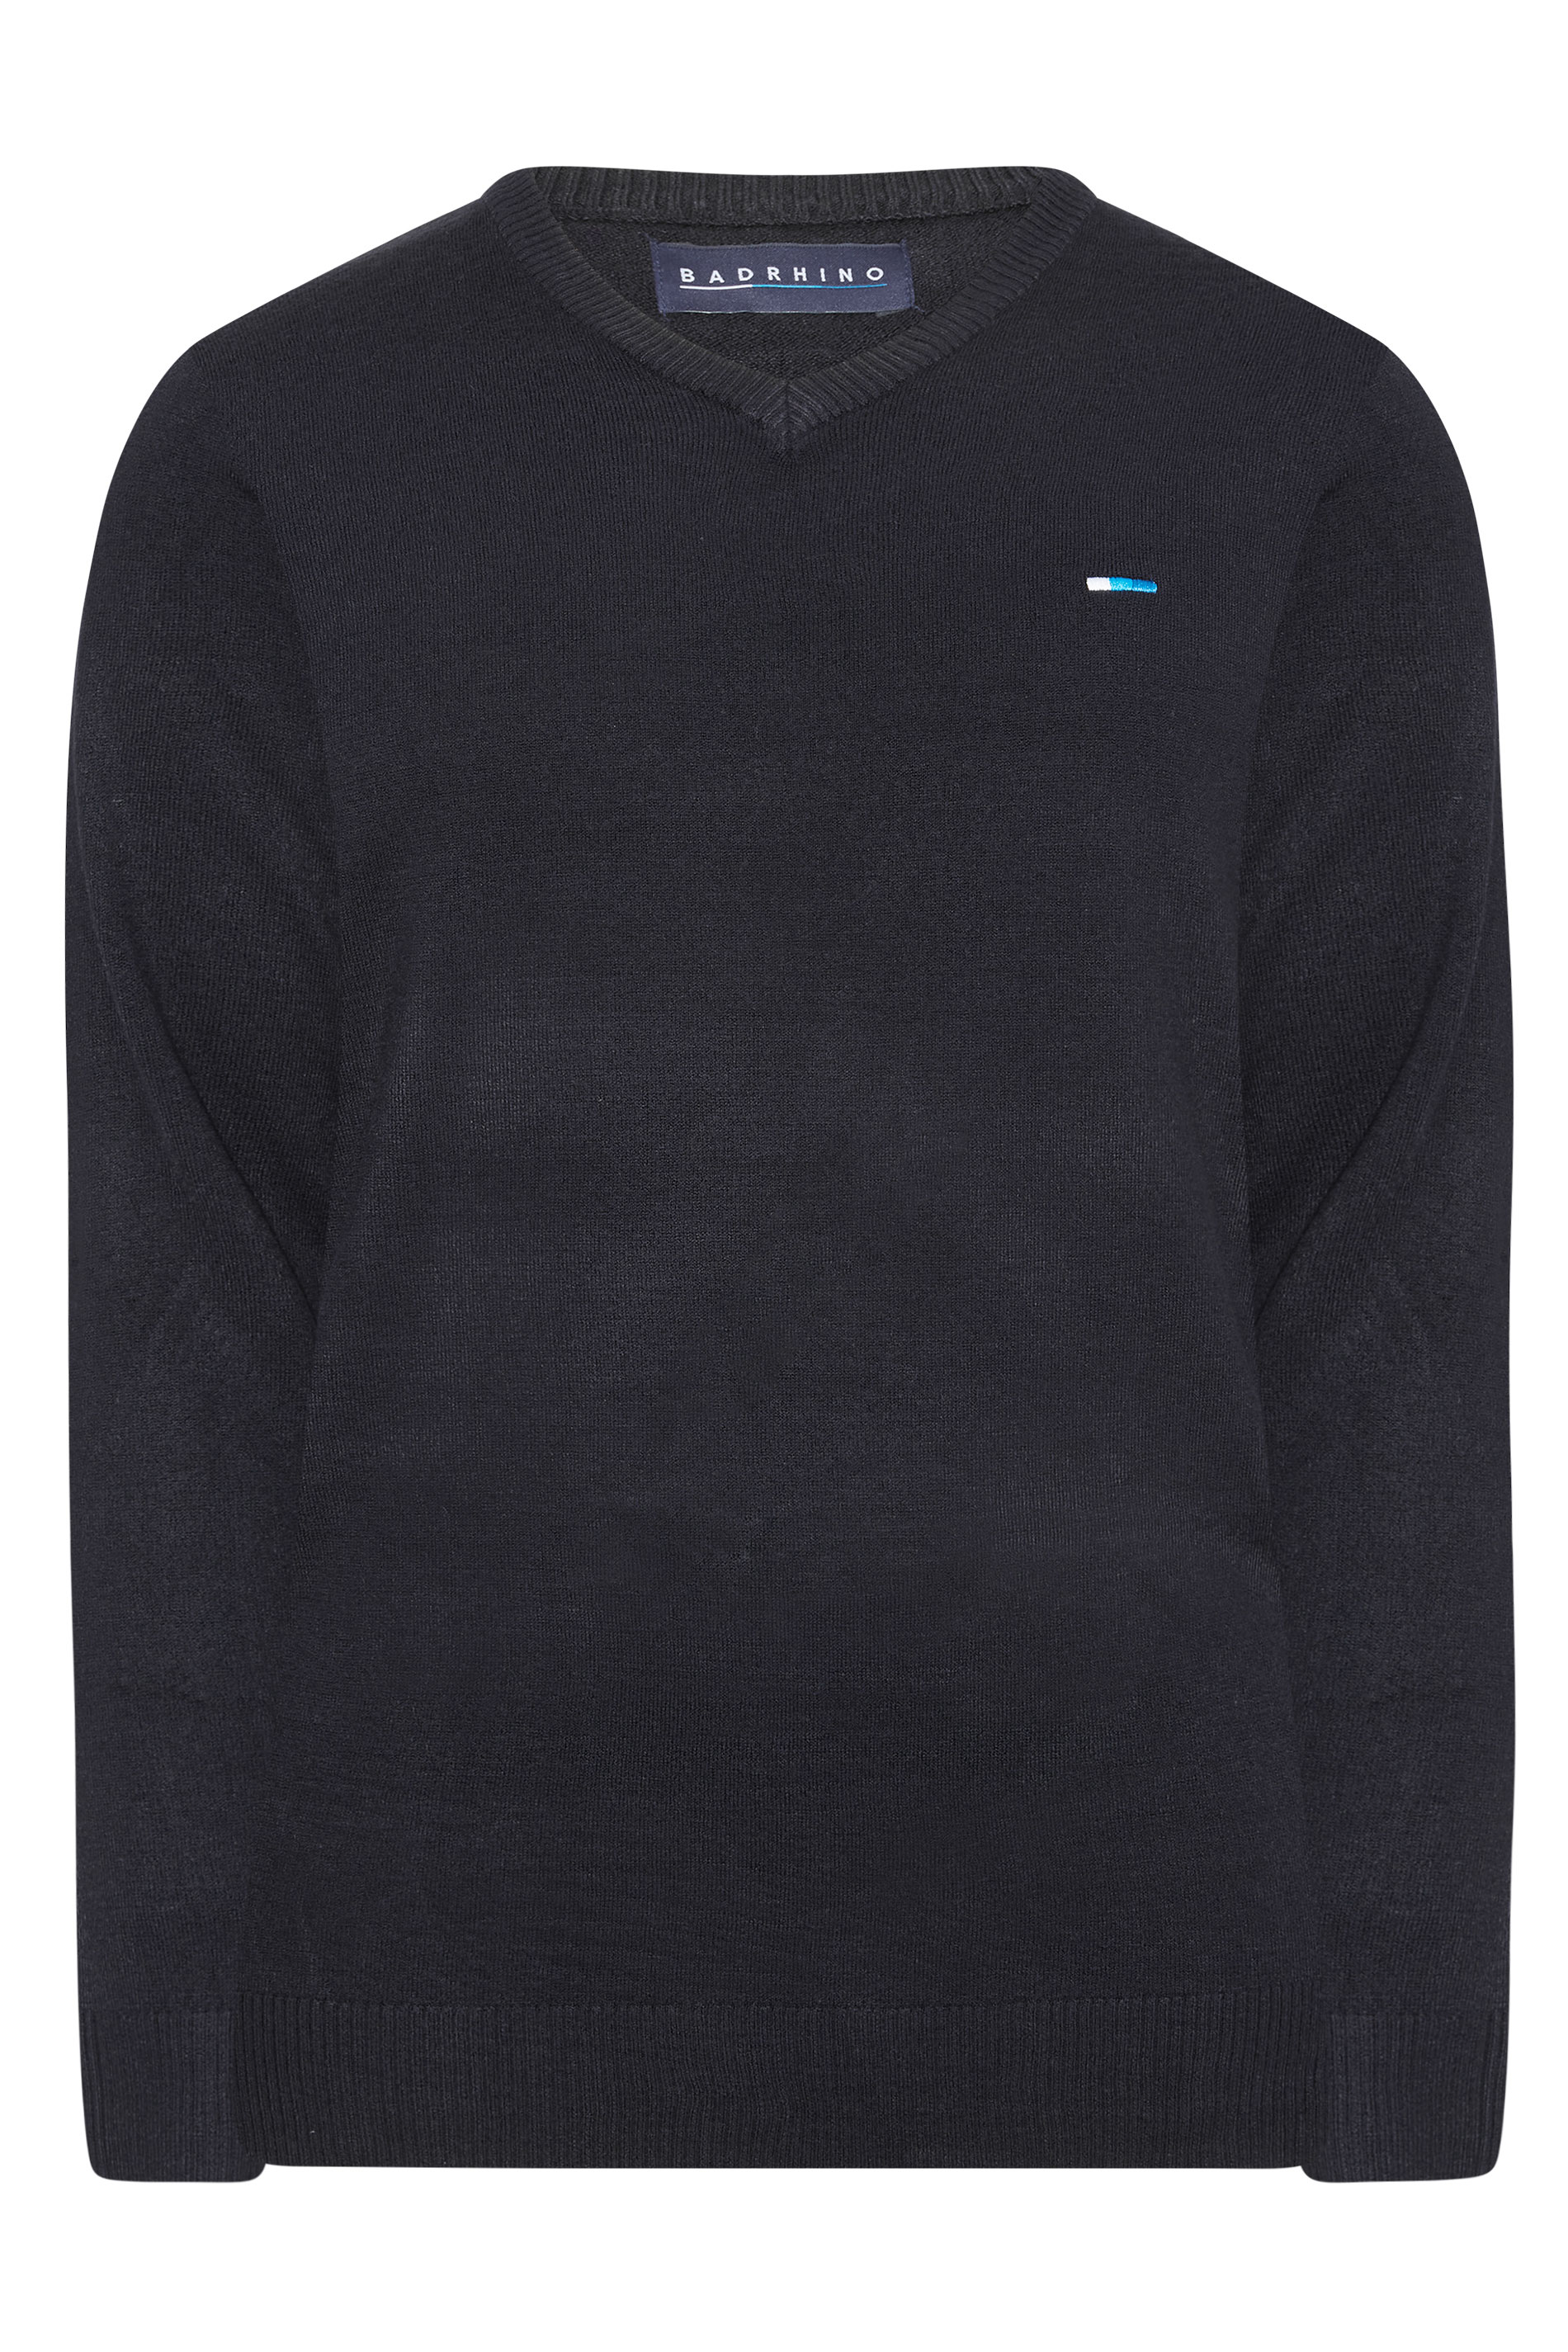 BadRhino Navy Blue Essential V-Neck Knitted Jumper | BadRhino 3